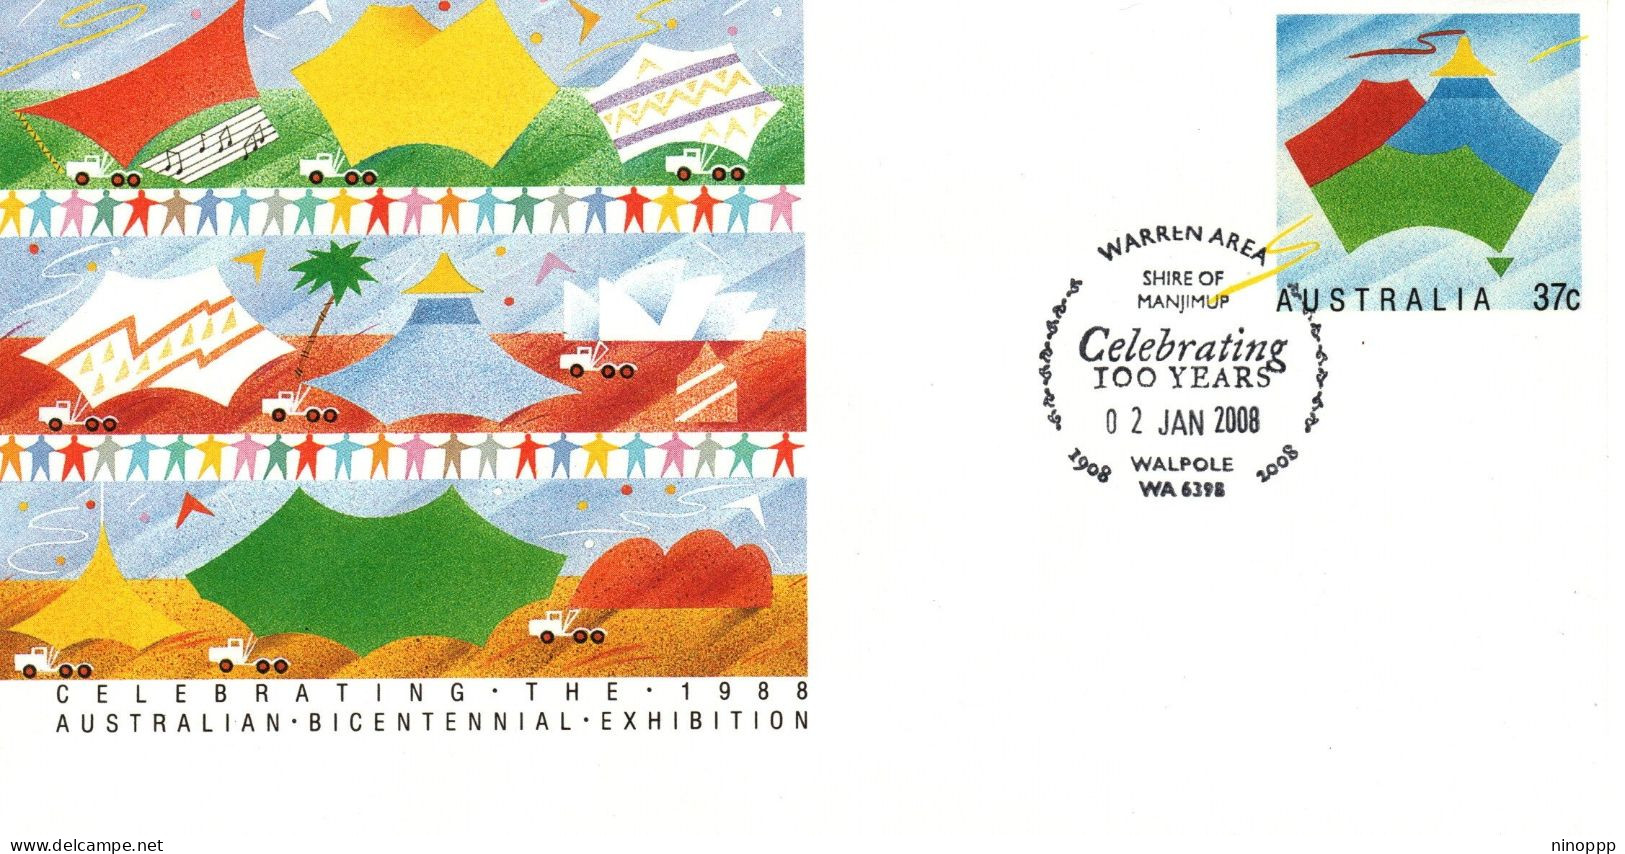 Australia 2008 ,Warren Area Celebrating 100 Years,Walpole Postmark,souvenir Cover - Bolli E Annullamenti